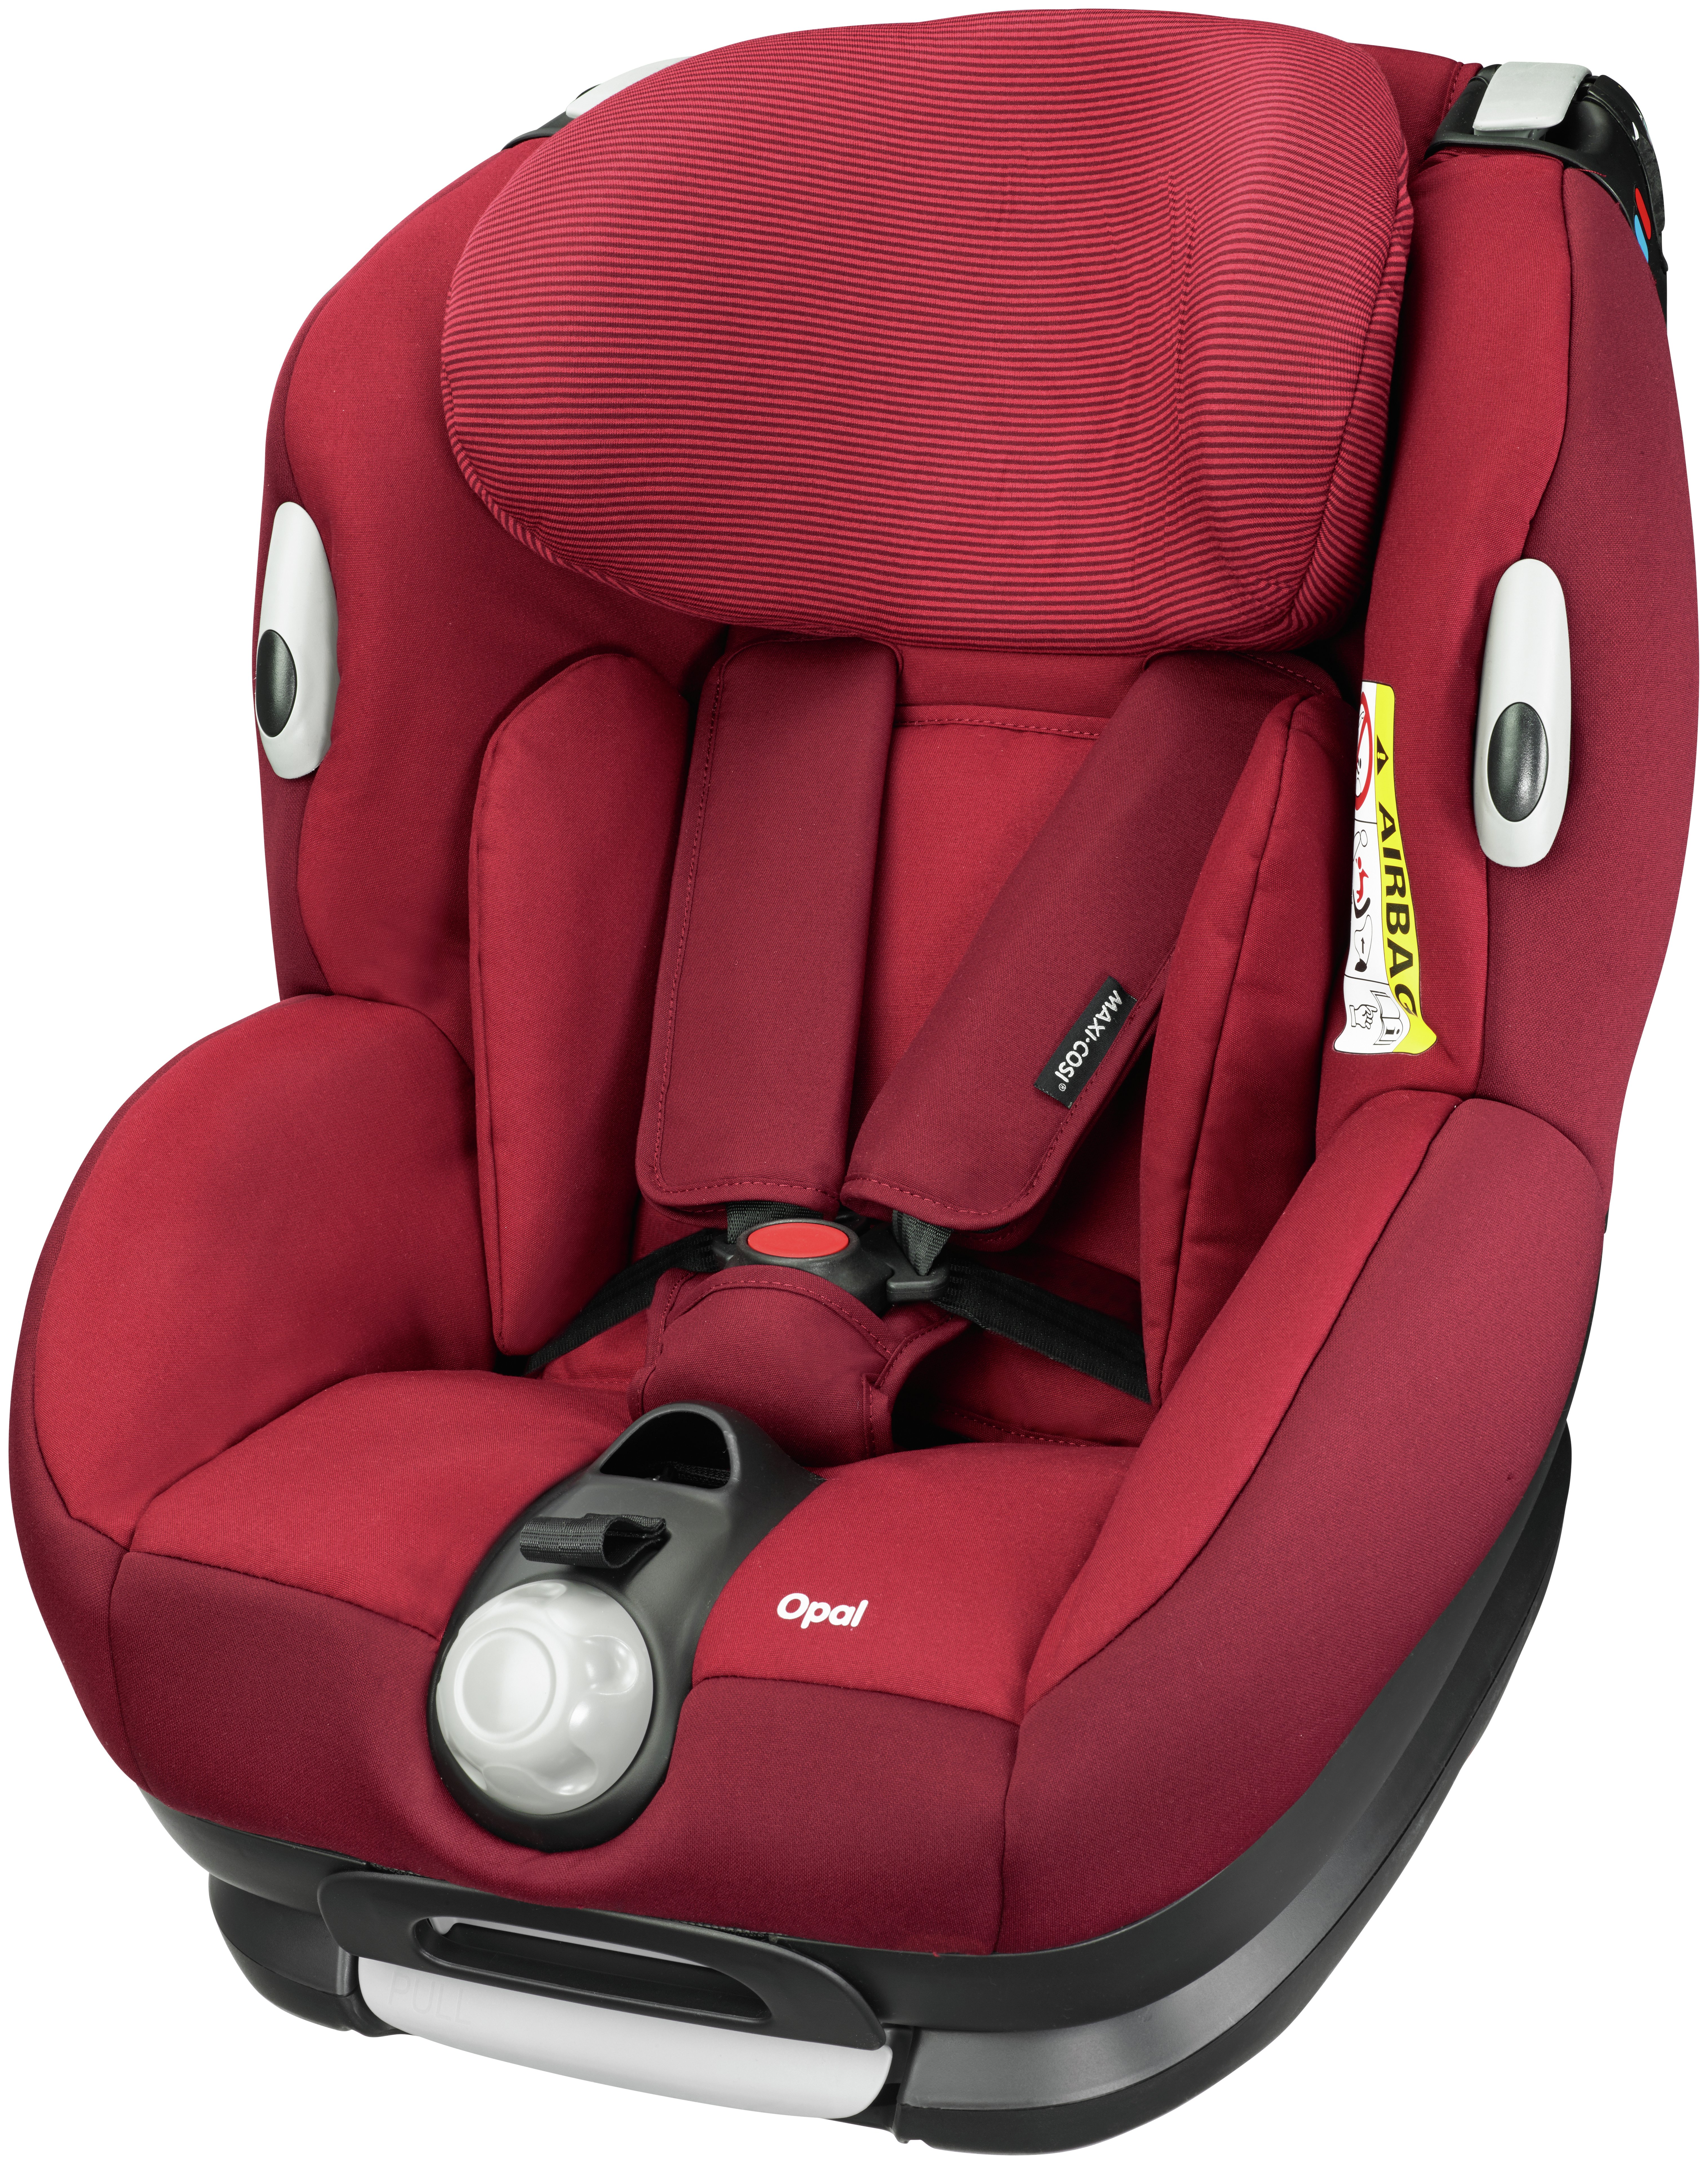 Maxi-Cosi Opal Group 0+ Car Seat - Robin Red